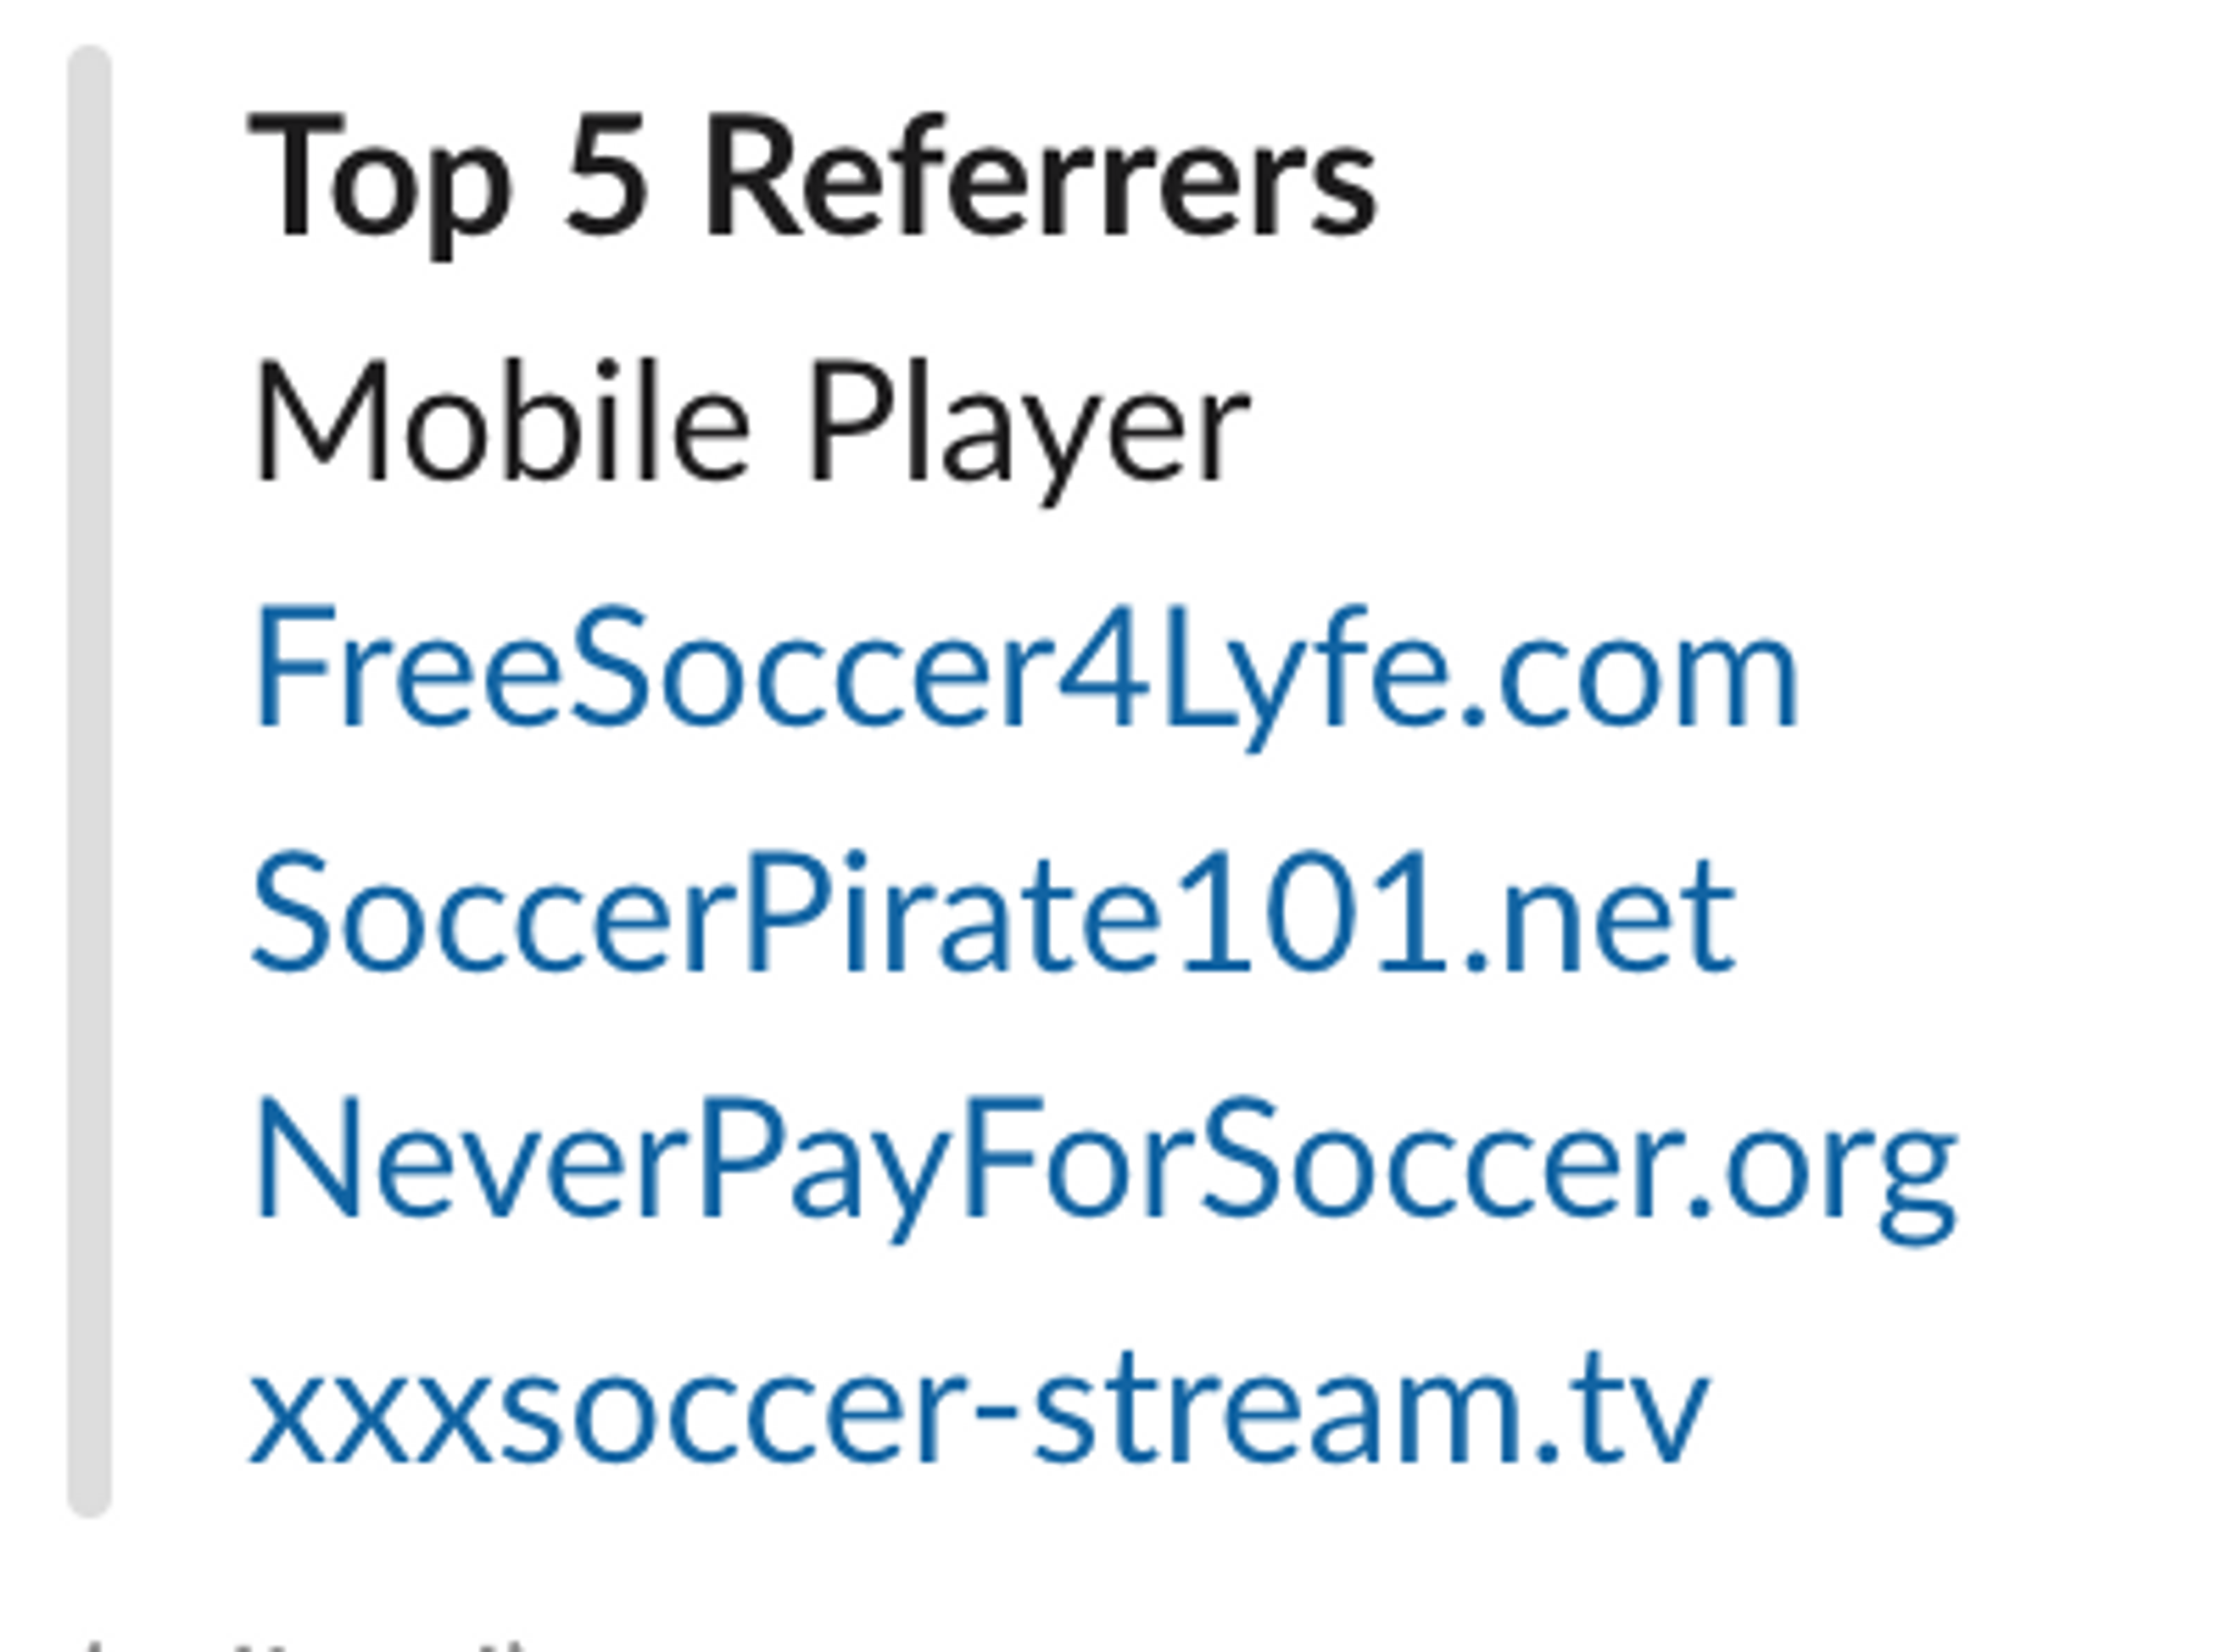 Slack notification for Top 5 Referrers "Mobile Player", FreeSoccer4lyfe.com SoccerPiarate101.net, NeverPayForSoccer.org, xxxsoccer-stream-.tv